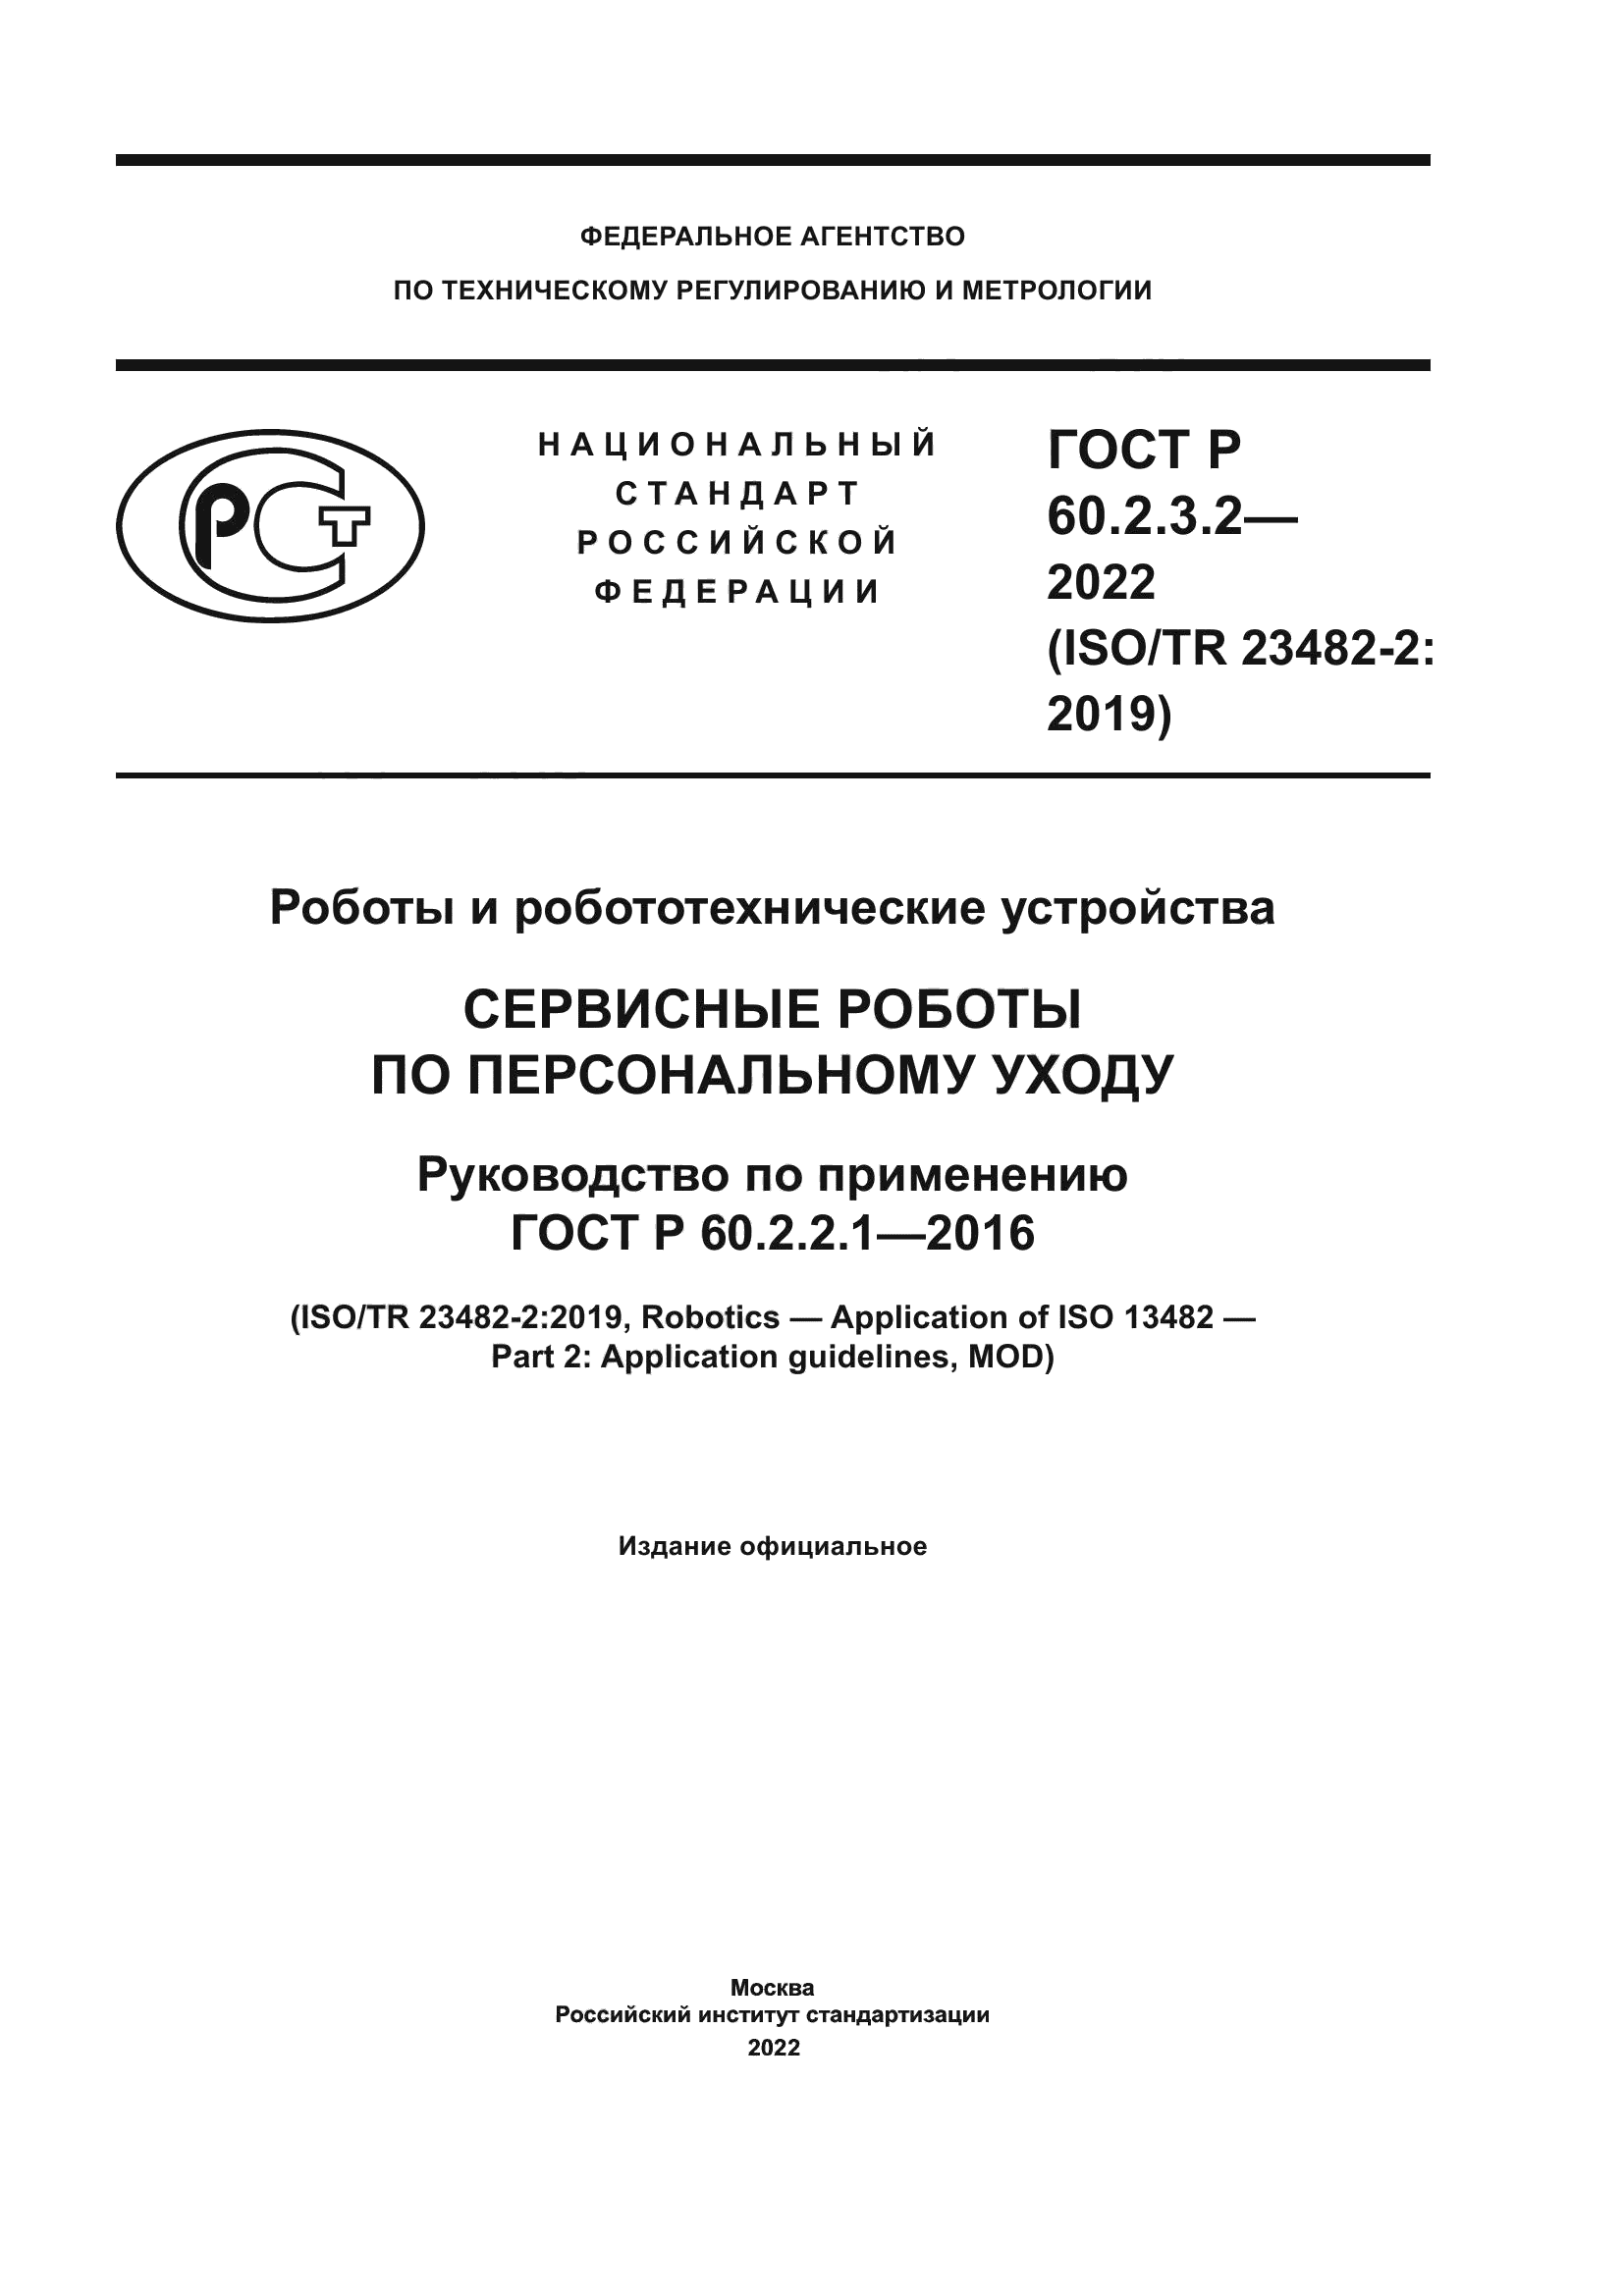 ГОСТ Р 60.2.3.2-2022